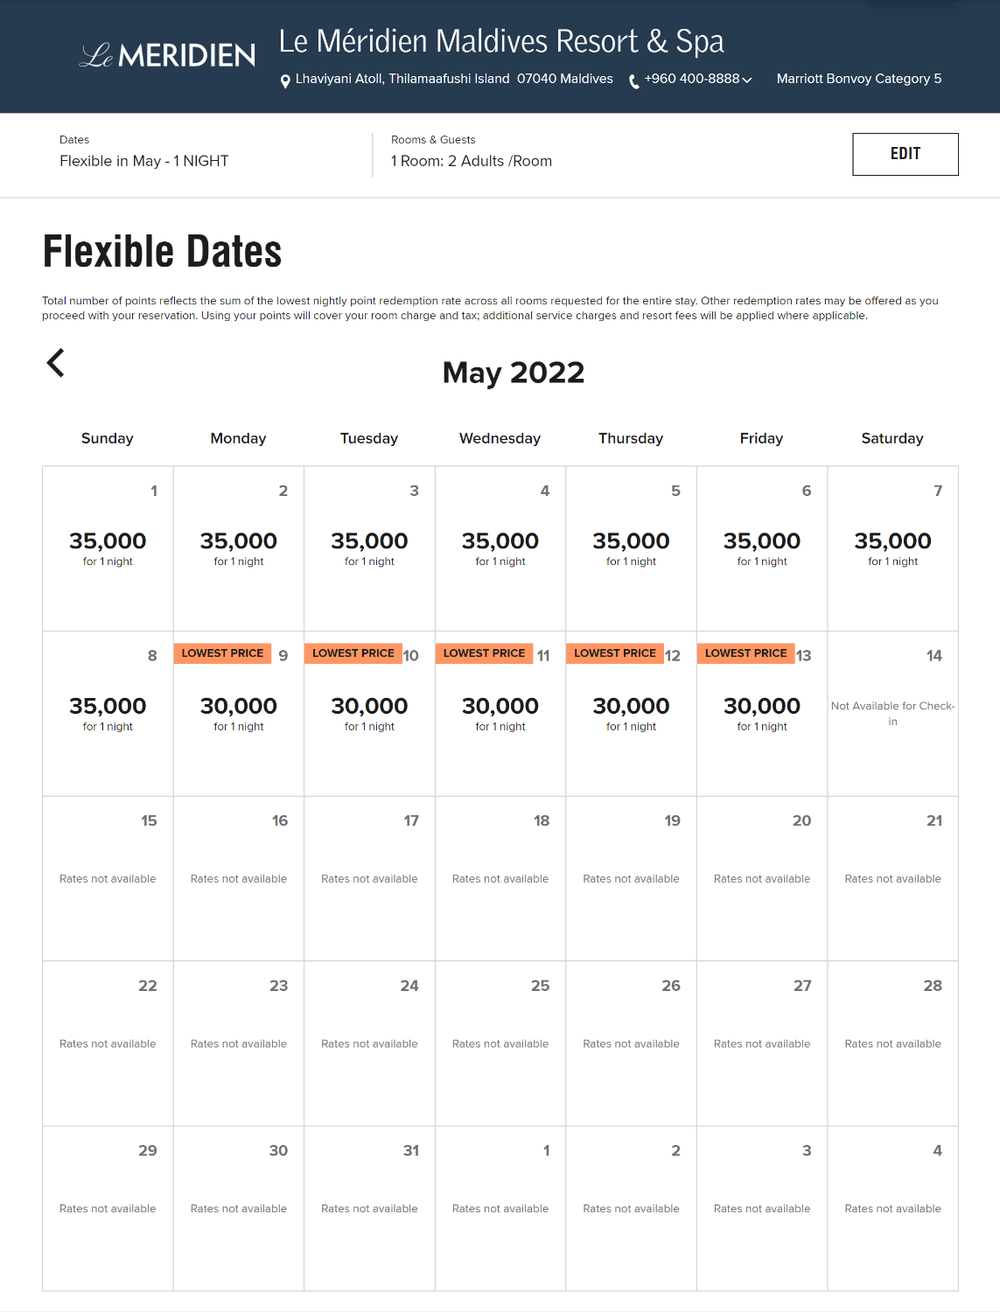  Calendar view of May 2022 